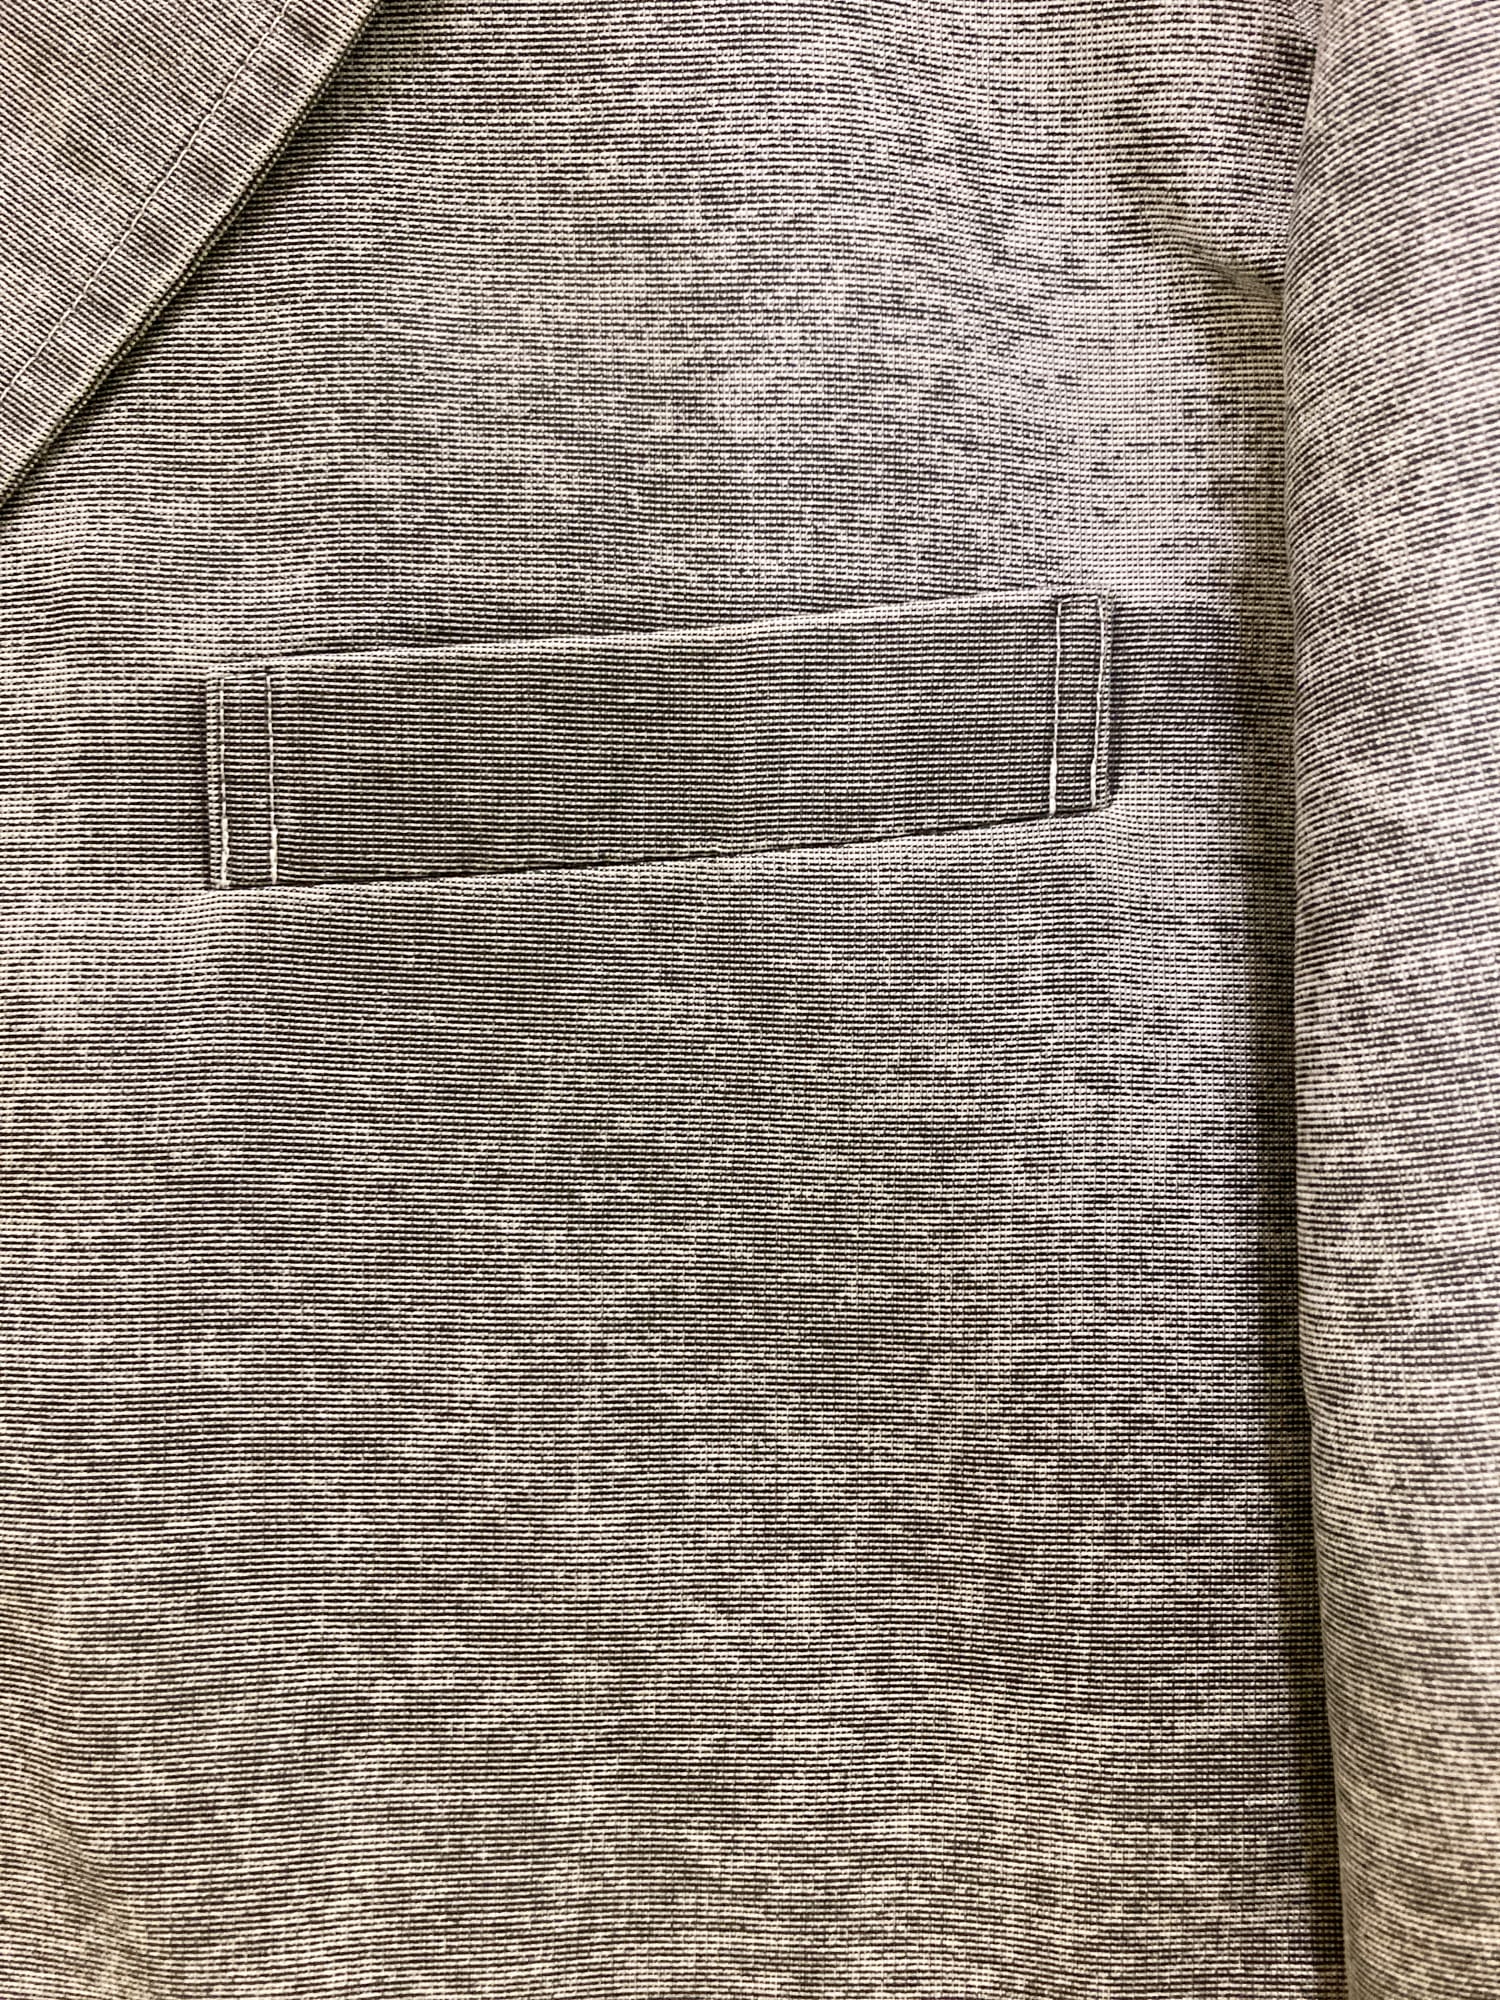 Comme des Garcons Homme 2000 textured grey nylon blazer